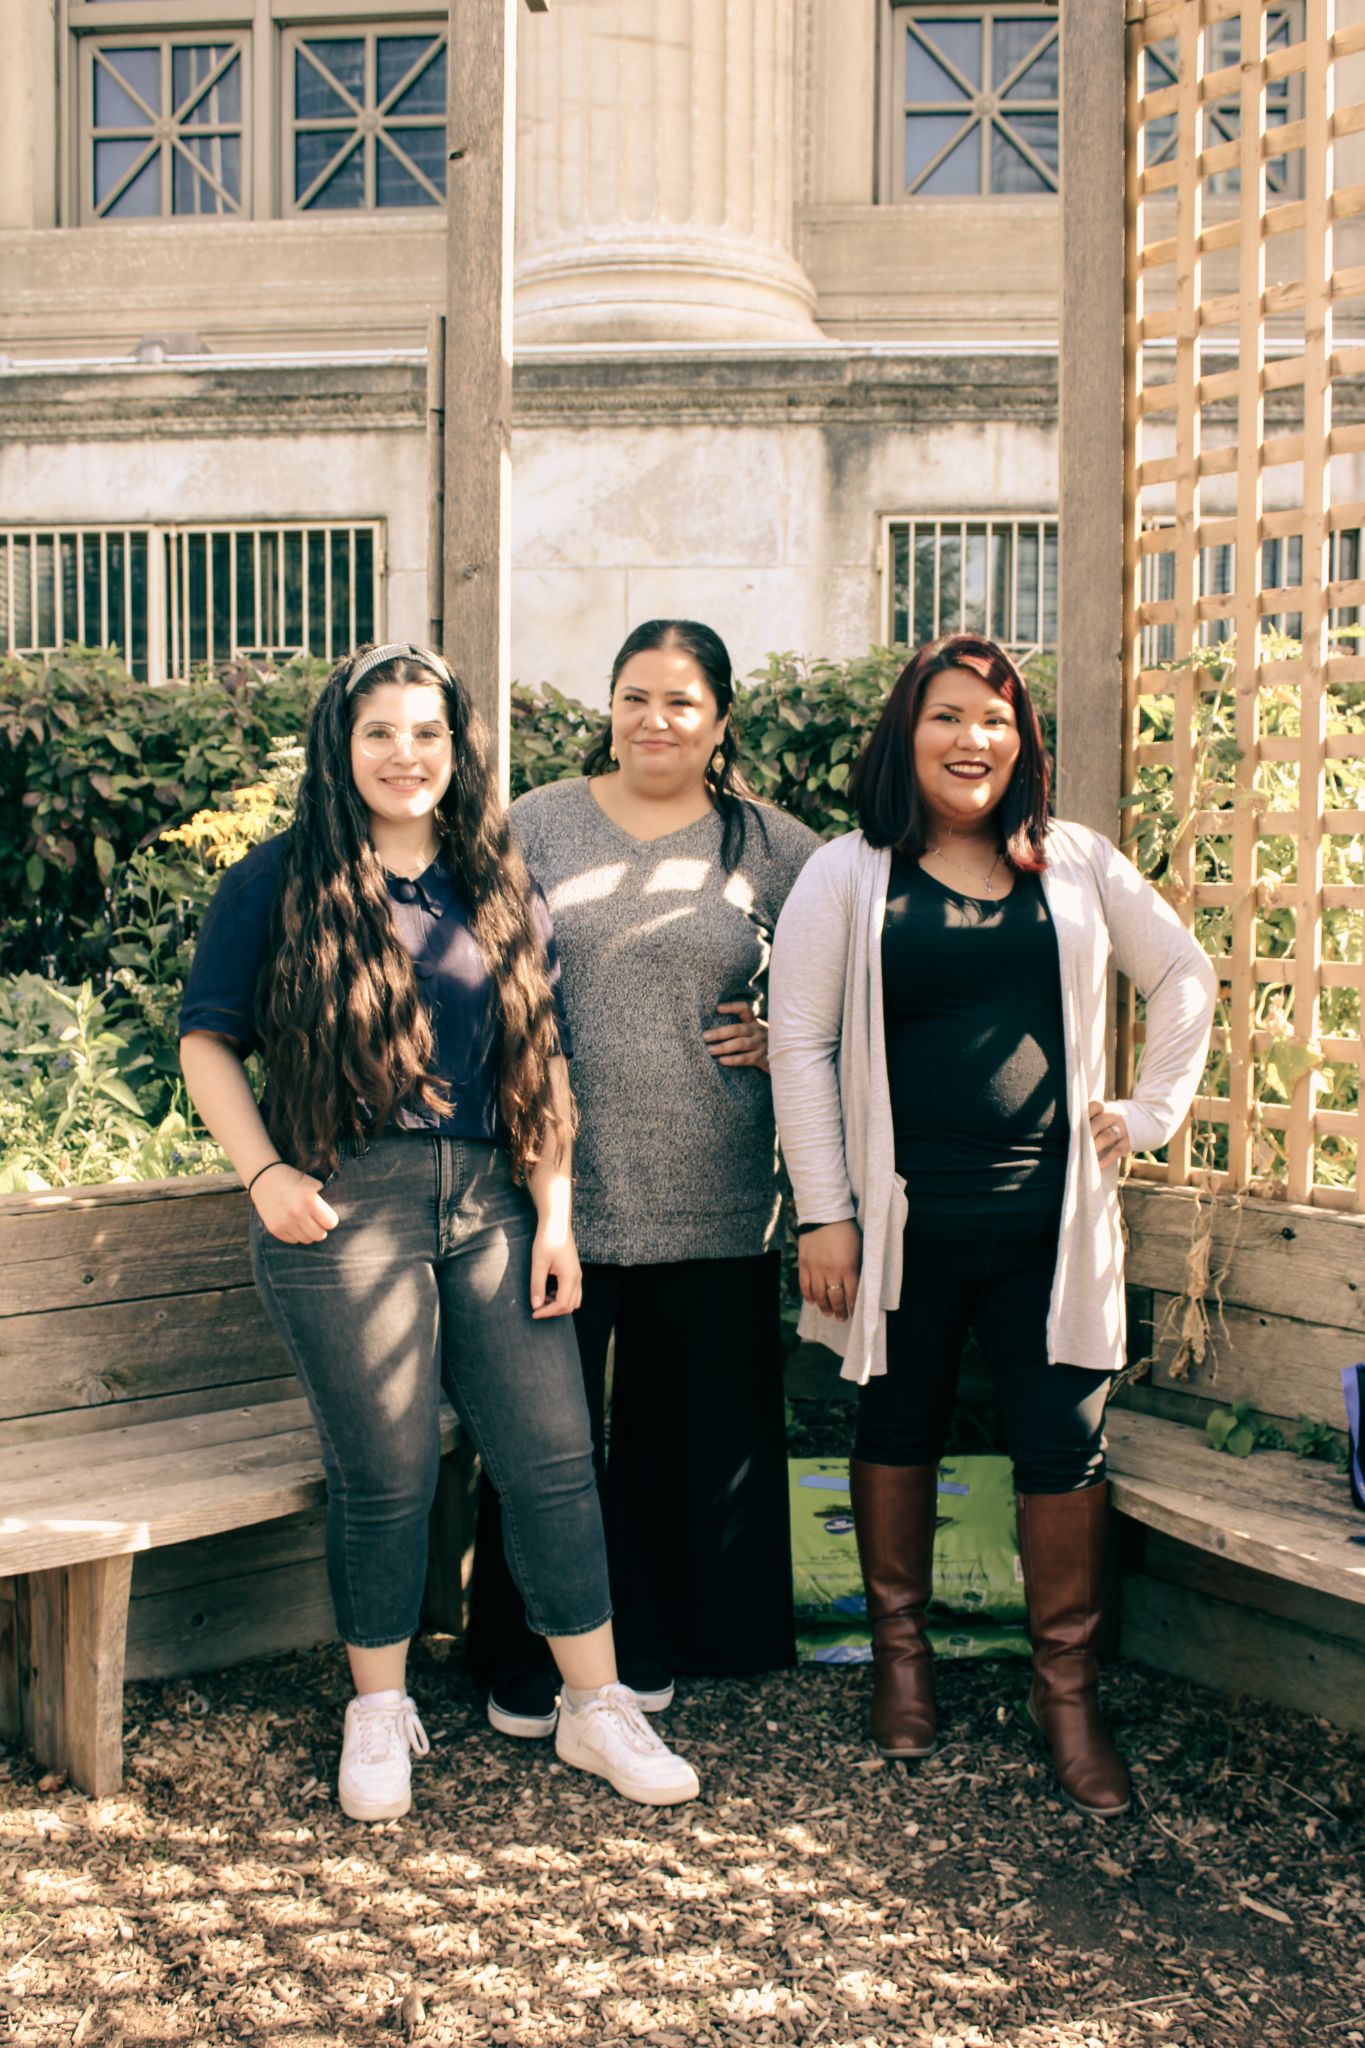 Left to right: Isabel Distefano, Lorena Lopez, and Alejandra Varley